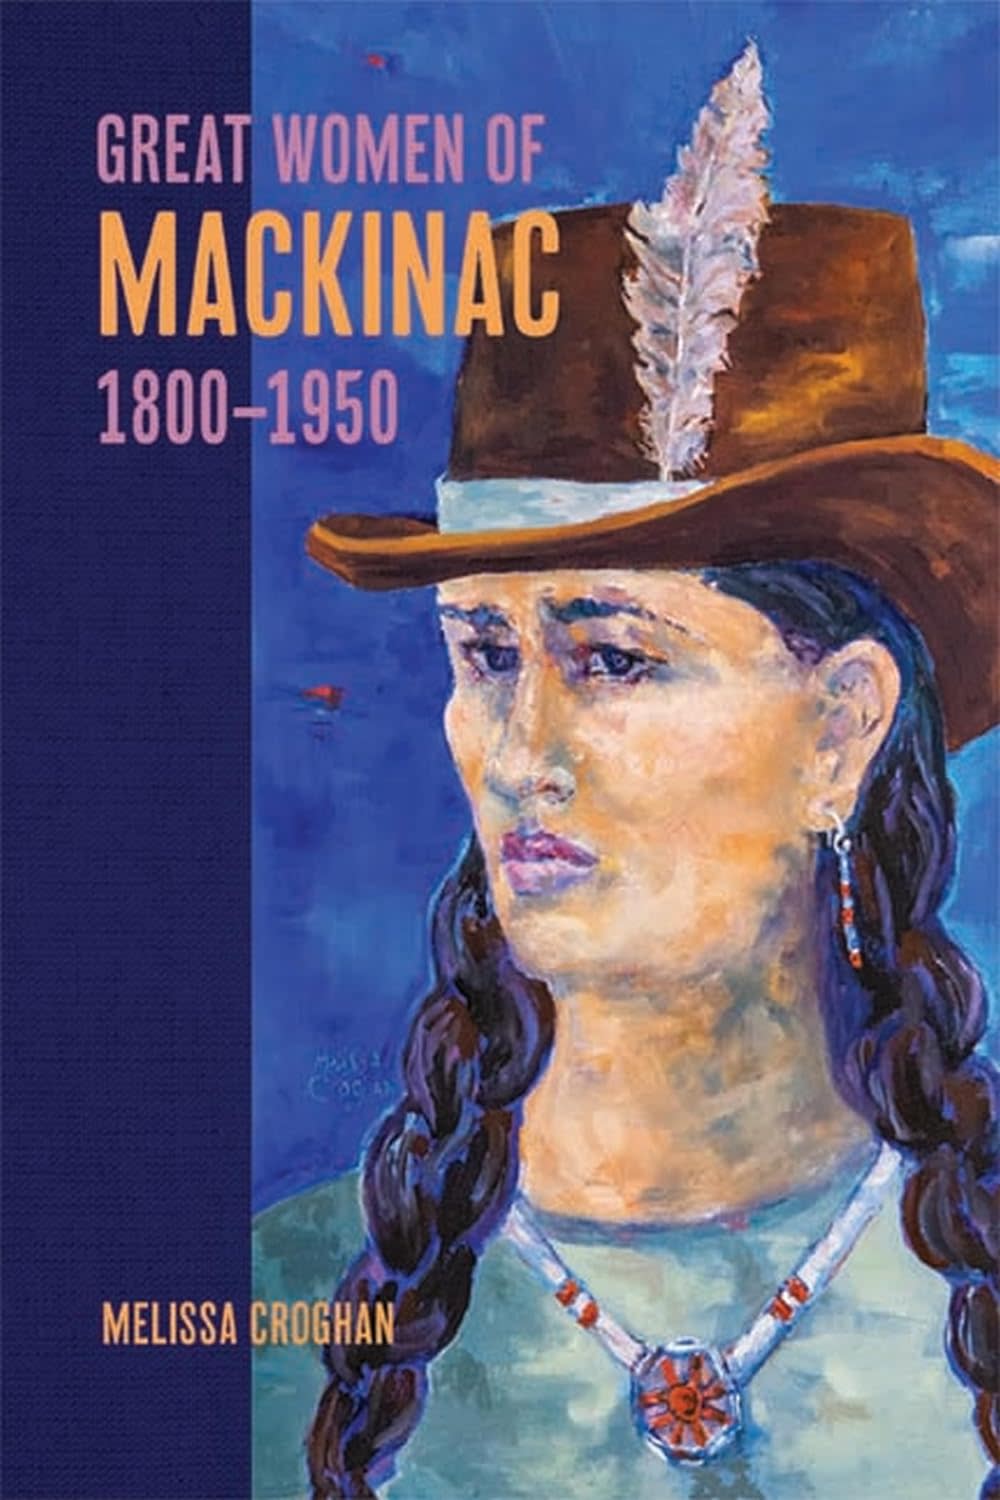 "Great Women of Mackinac, 1800-1950"